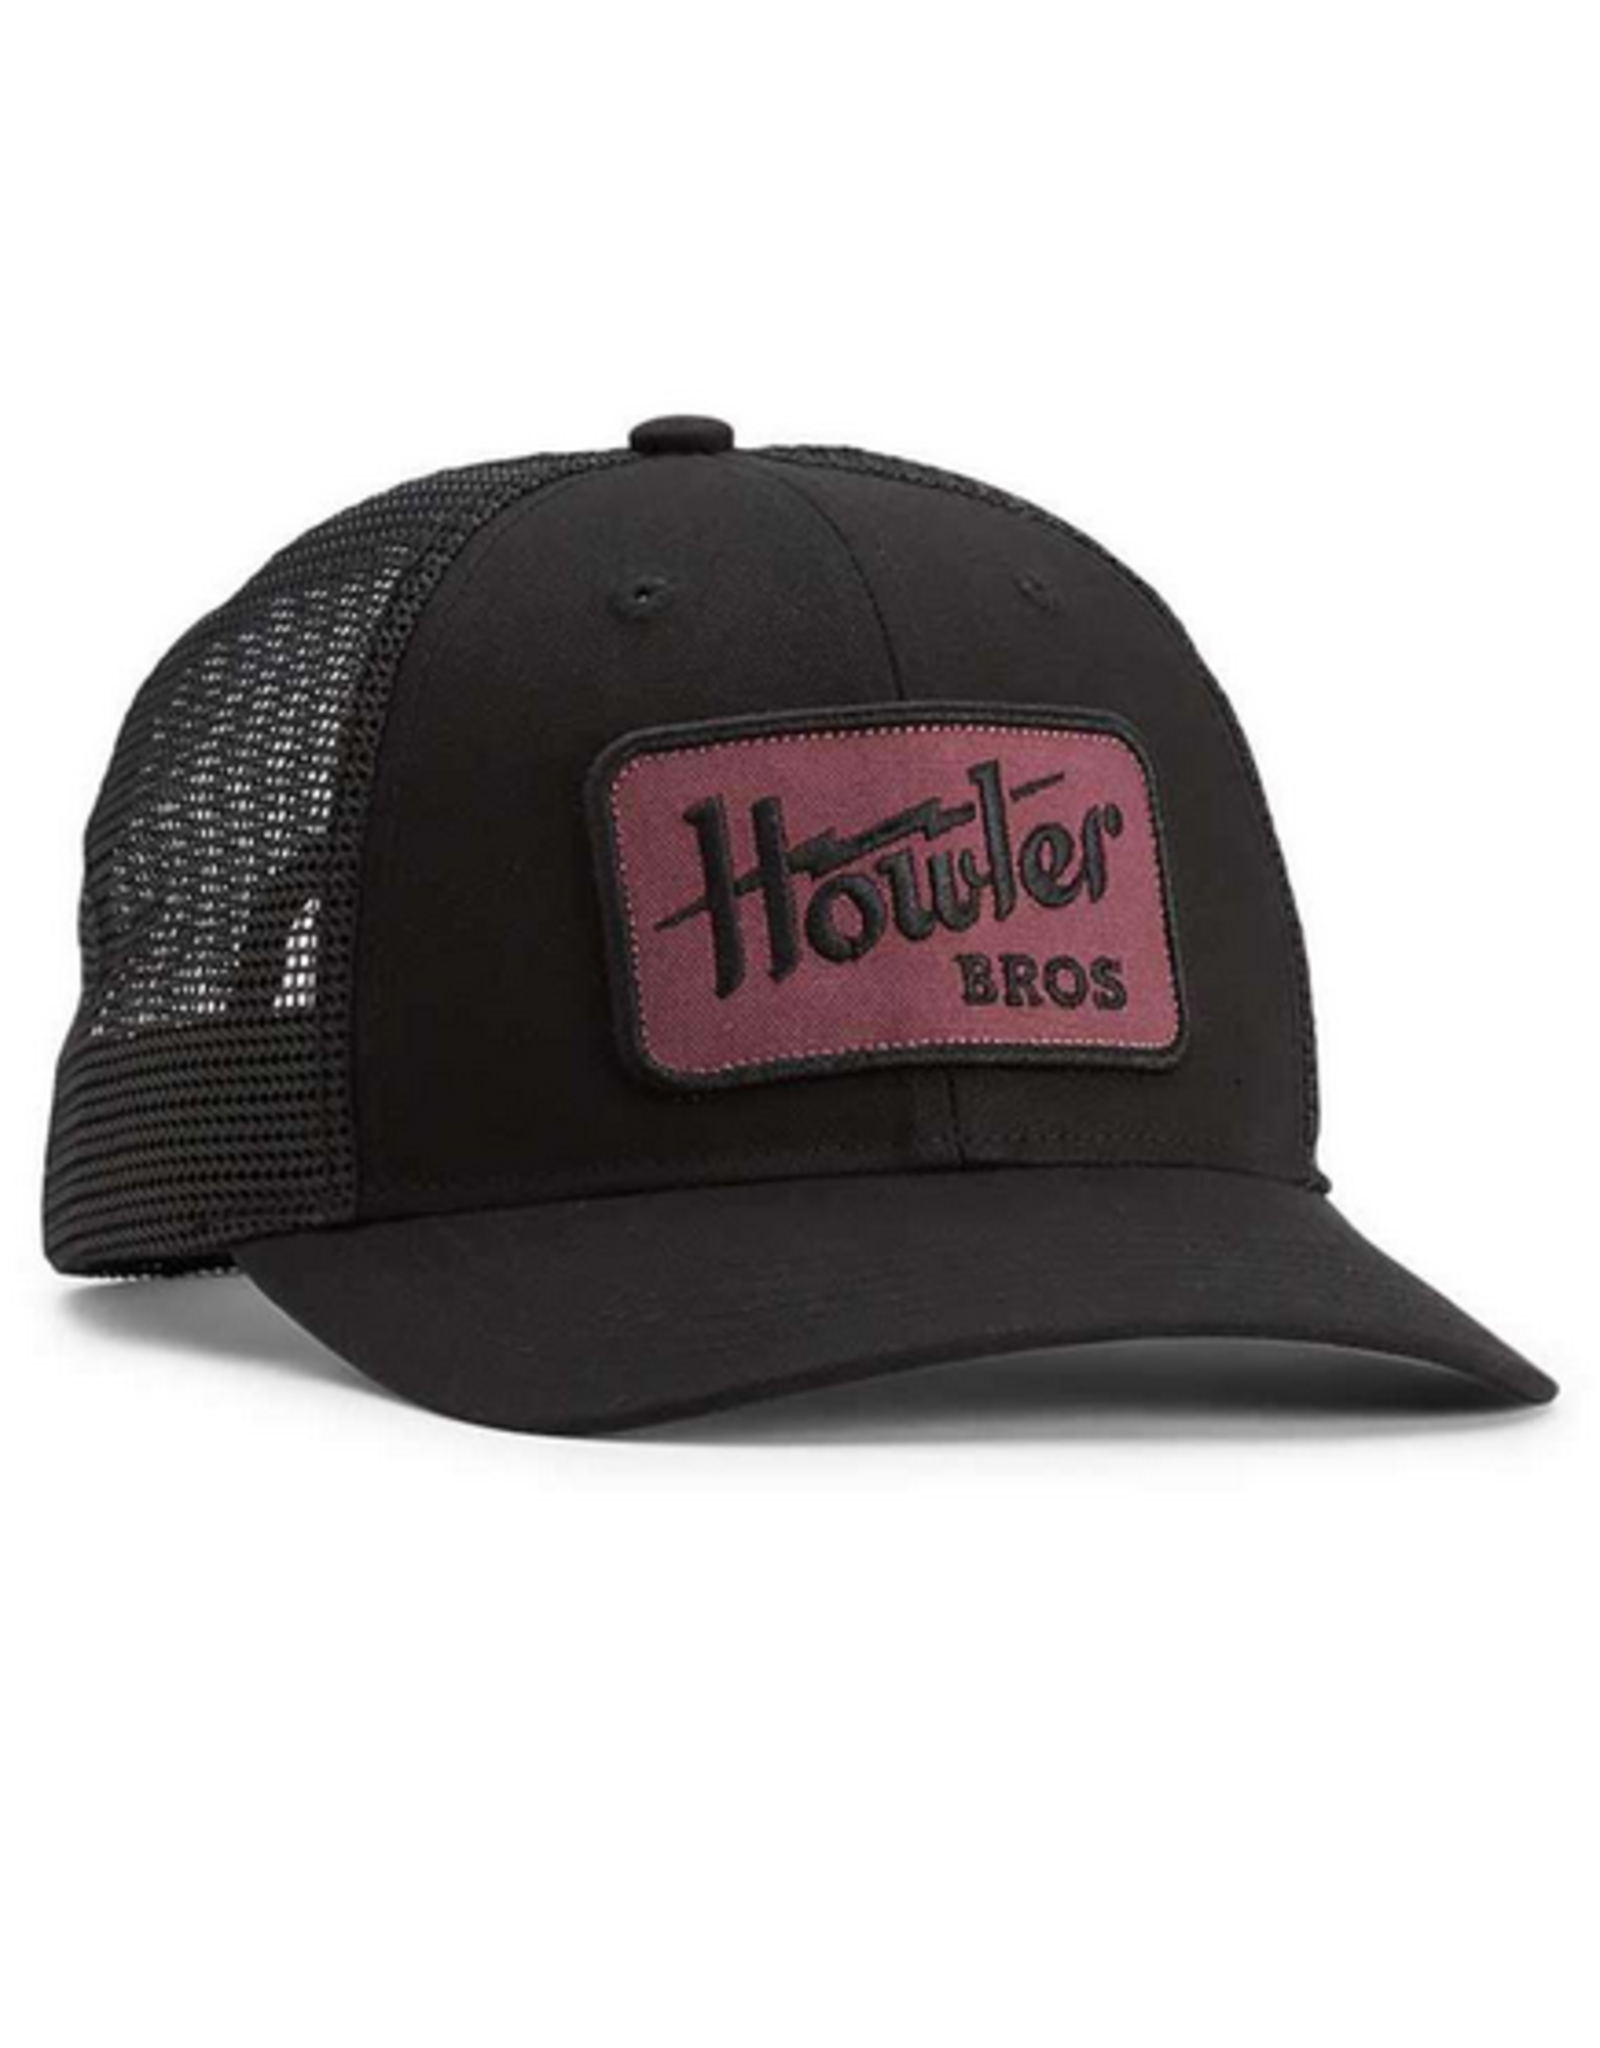 Howler Howler Brothers Electric Standard Hat (Antique Black)